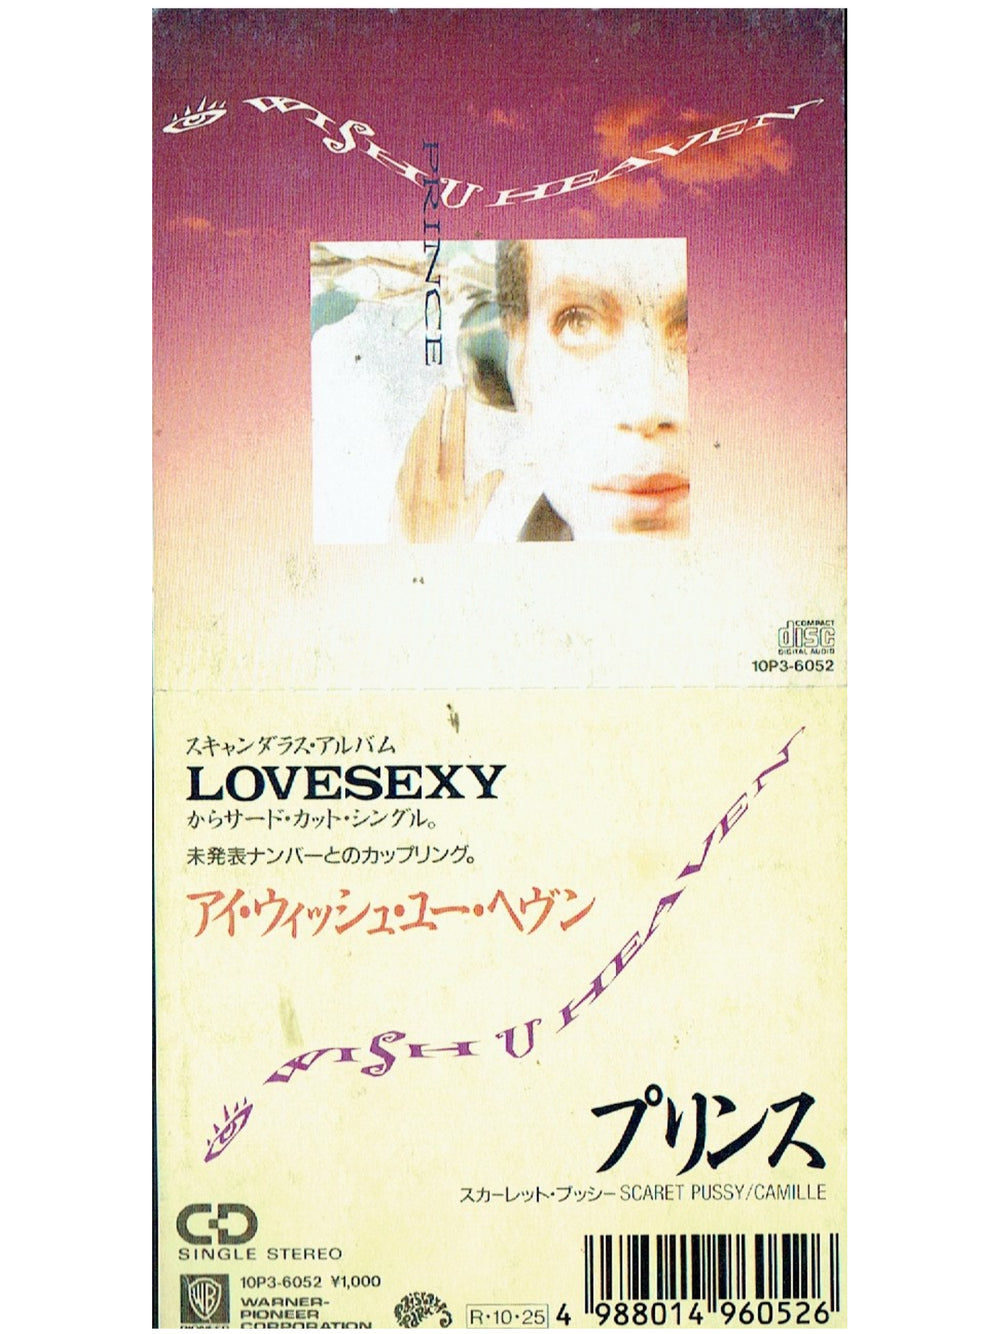 Prince – I Wish U Heaven Scarlett Pussy Original Japan 3 Inch CD Single Release